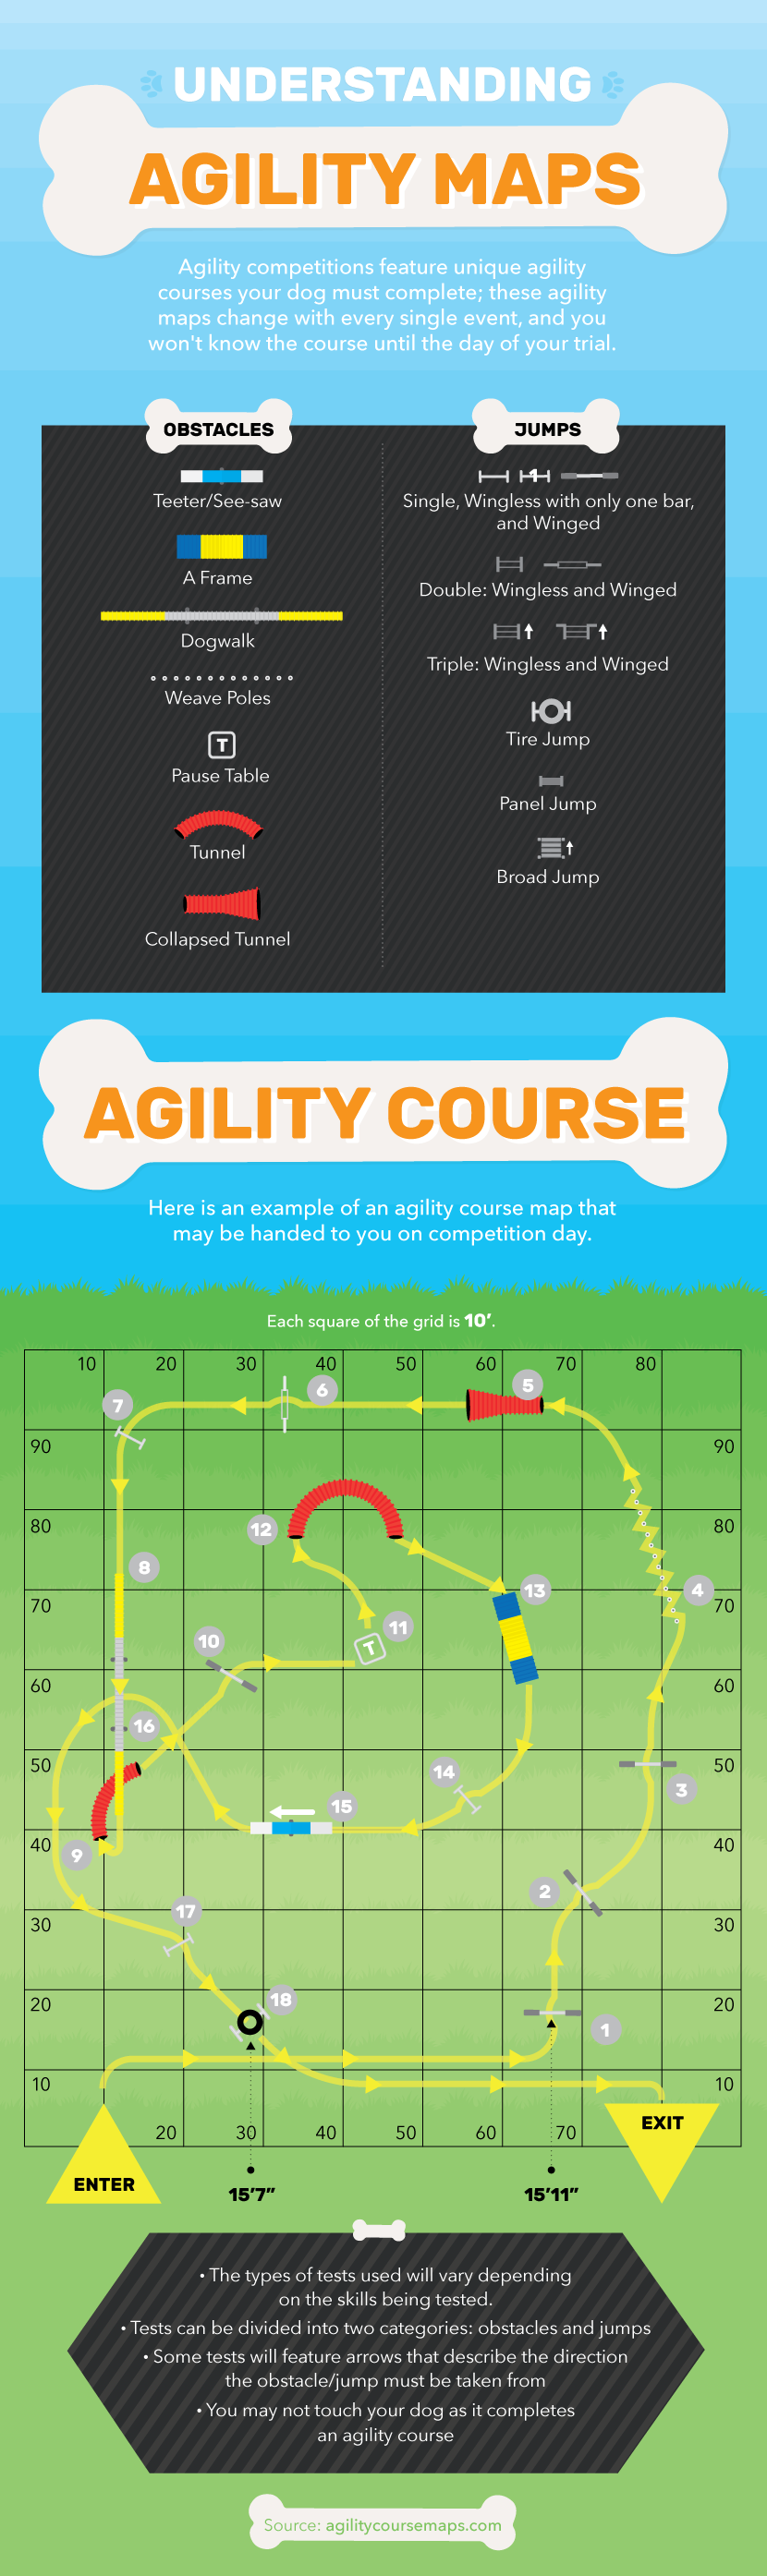 Understanding Agility Maps - Dog Agility Training